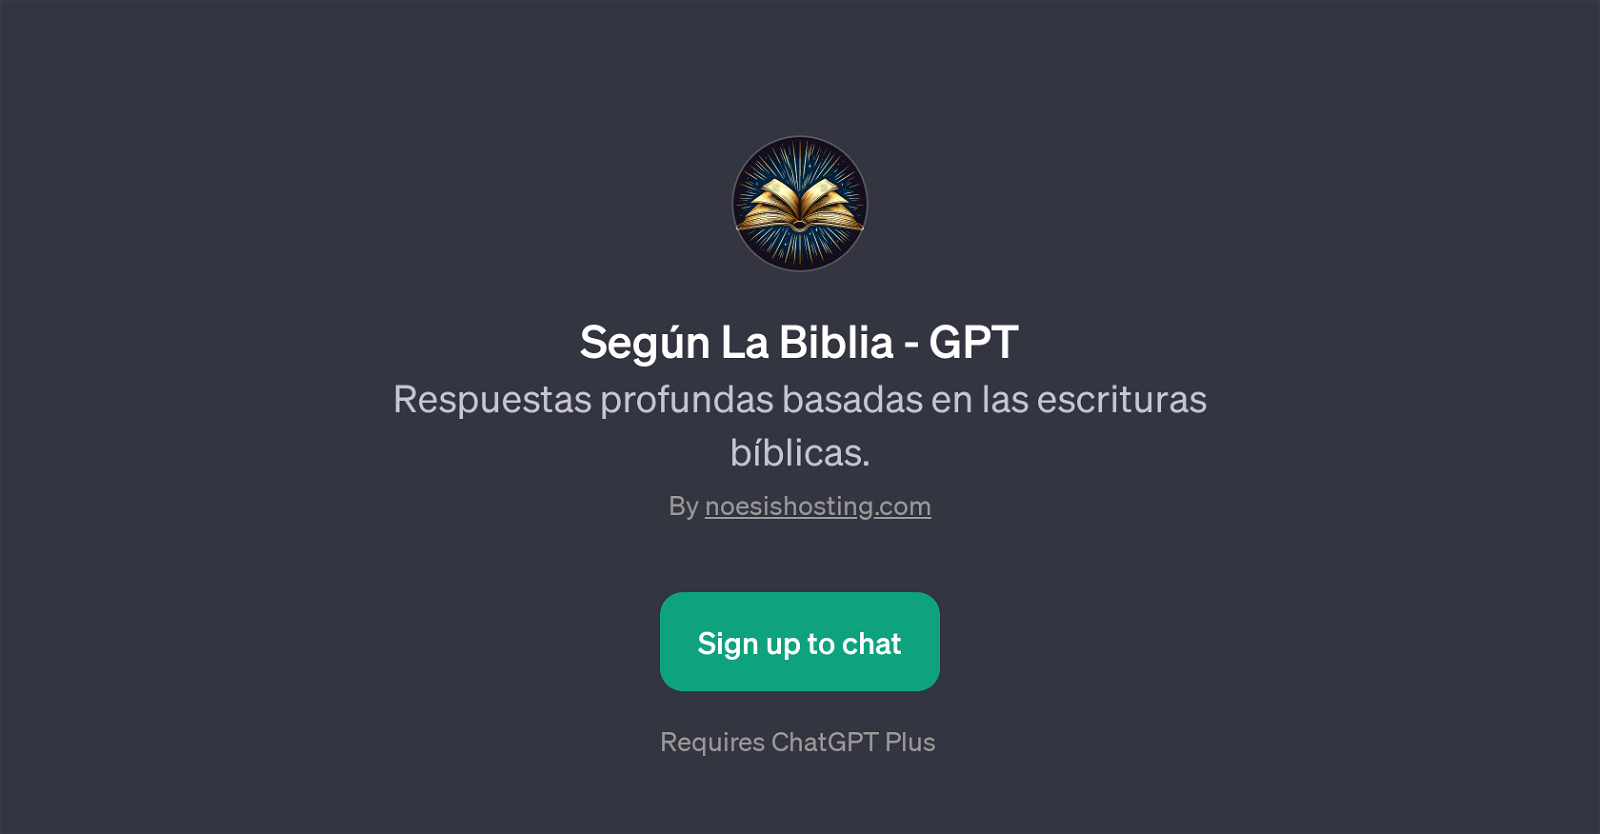 Segn La Biblia - GPT website